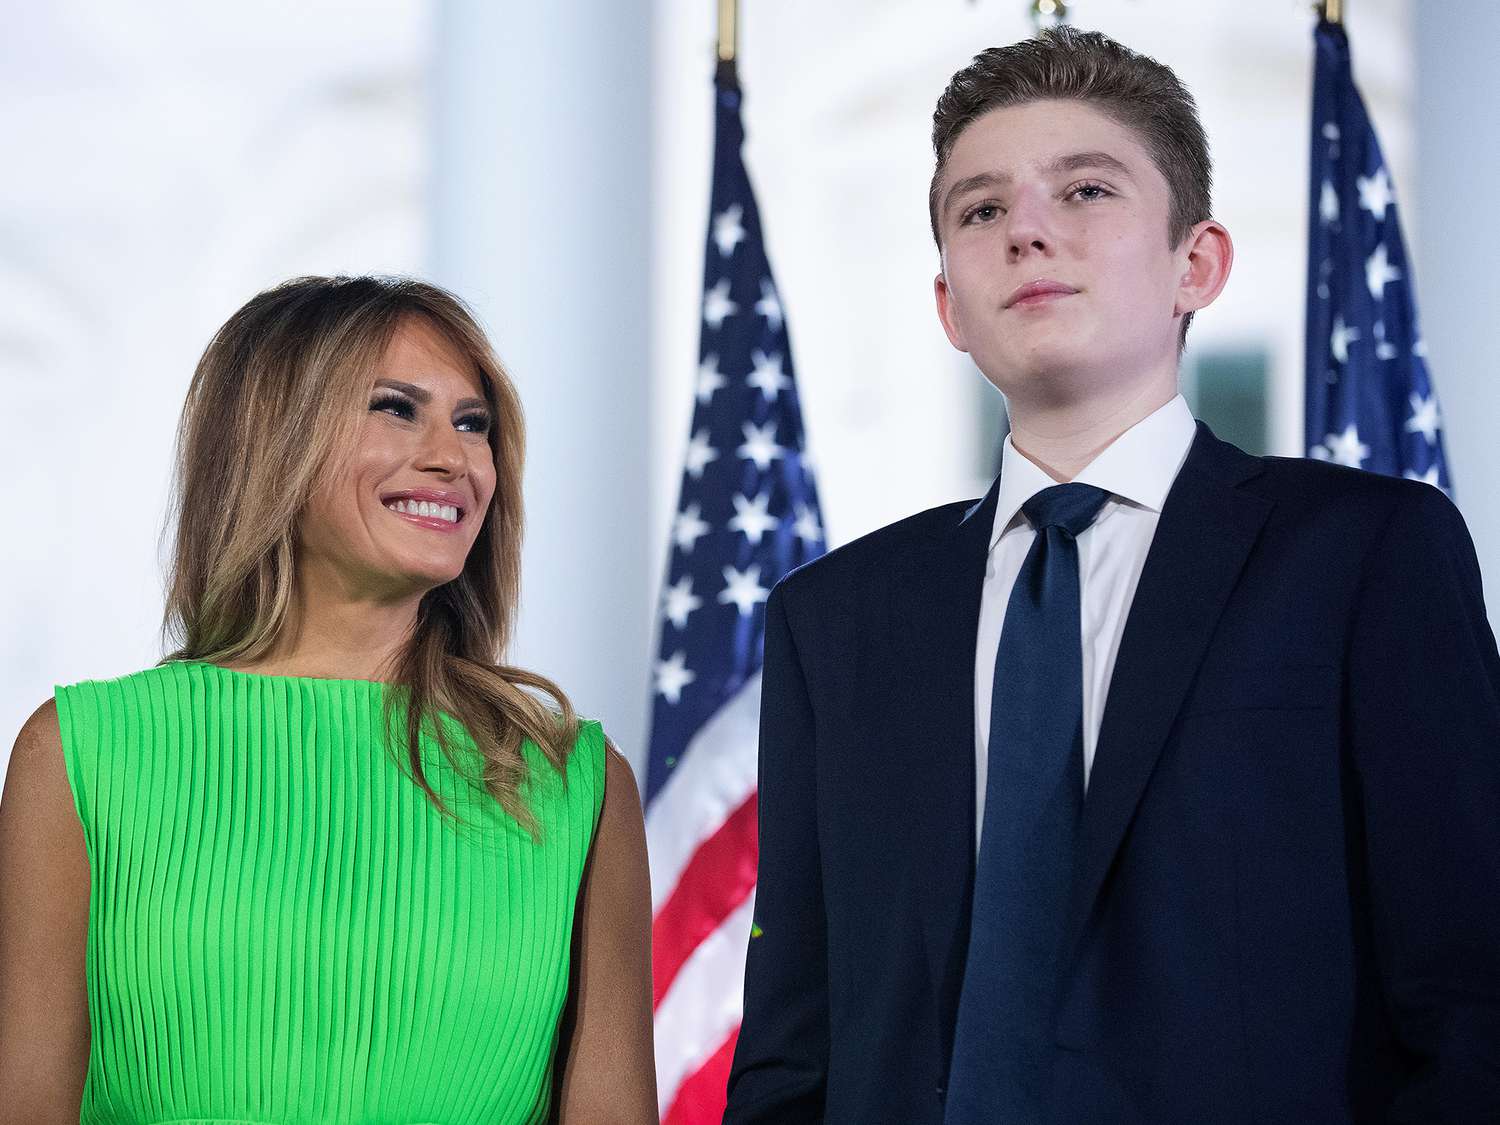 Melania Trump (L) looks at her son Barron Trump after U.S. President Donald Trump